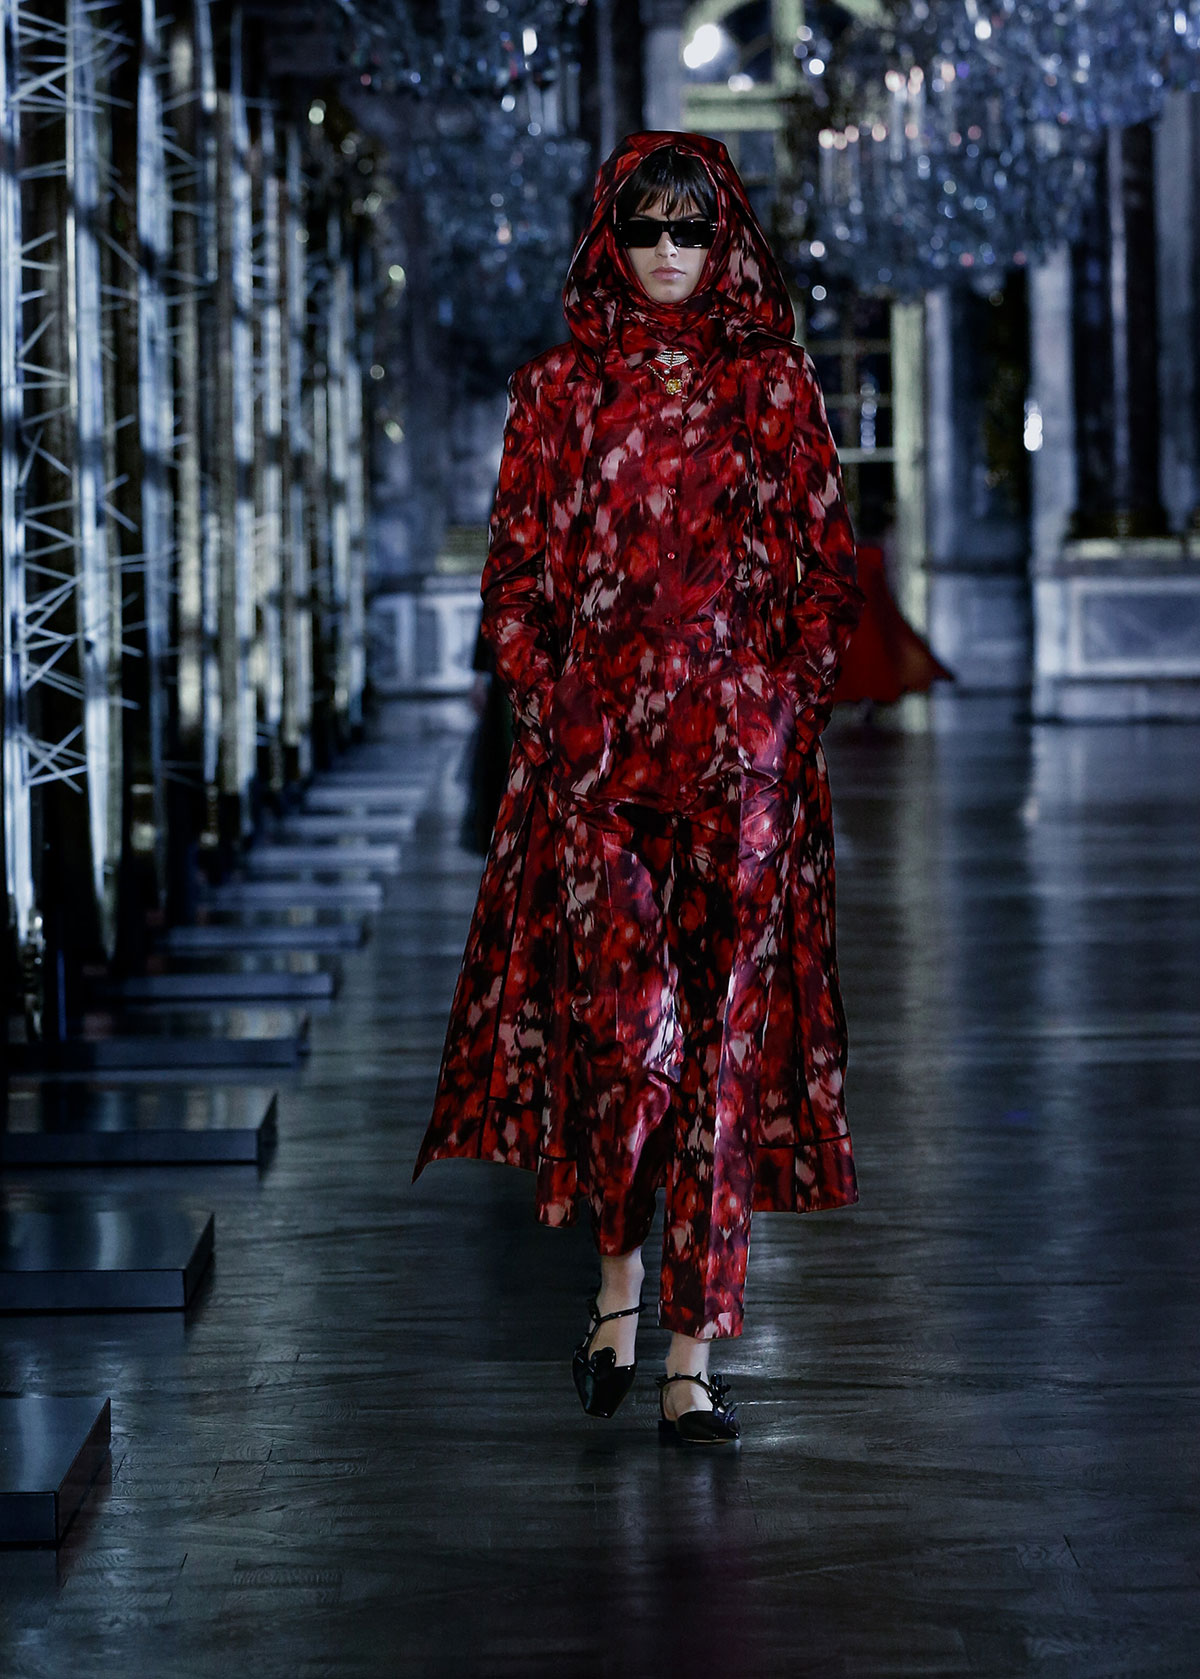 Christian Dior Fall/Winter 2021 | The Fashionography